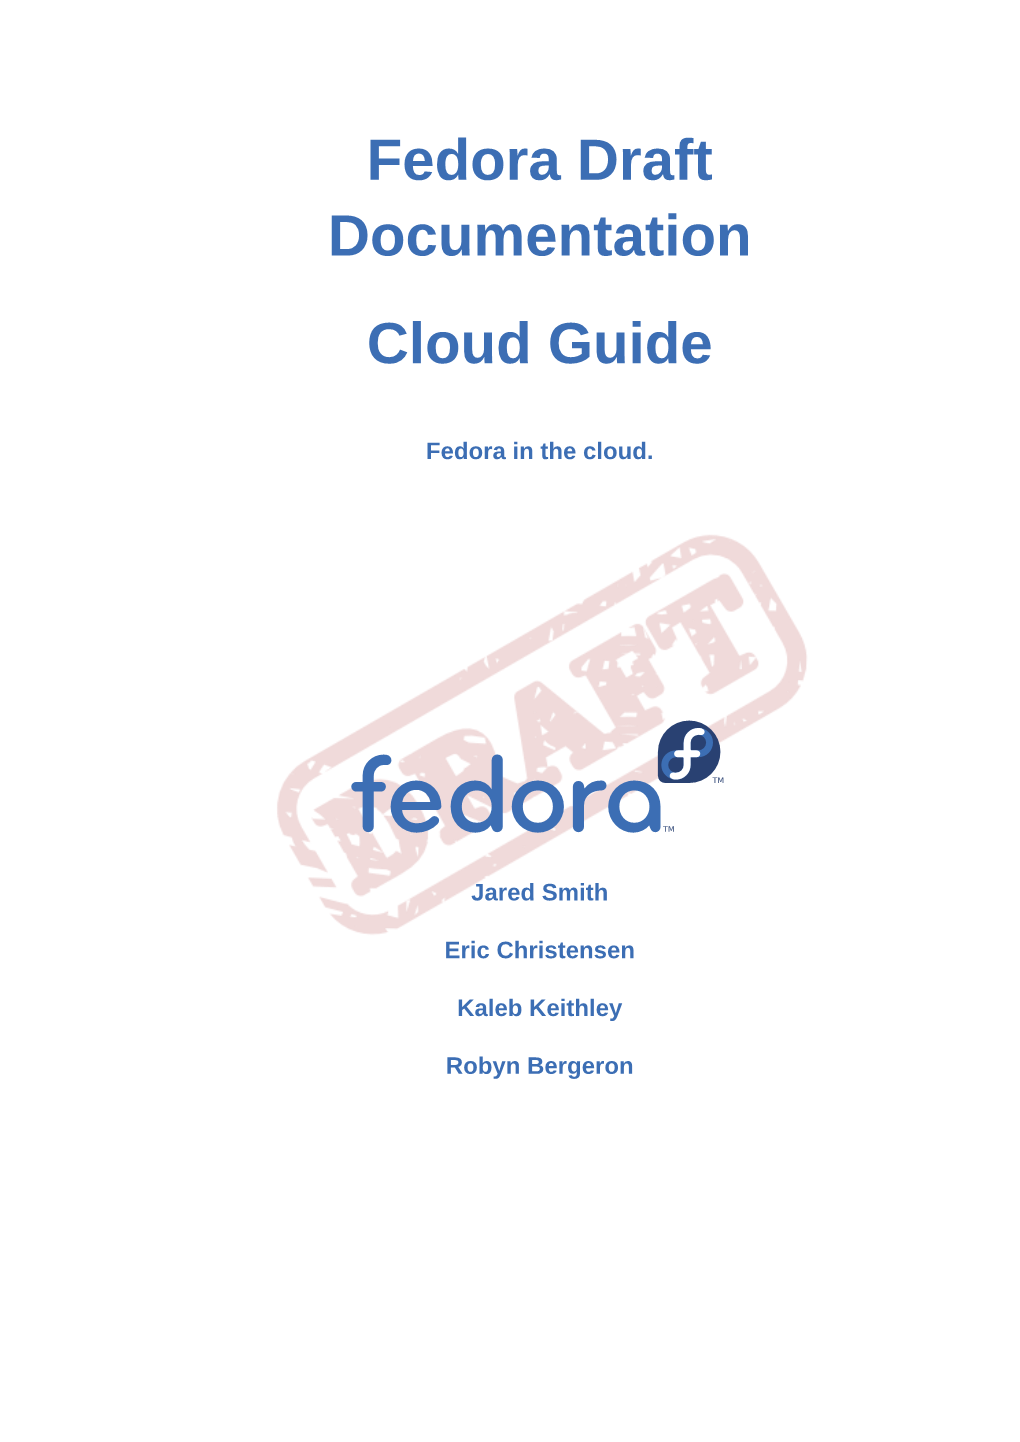 Fedora Draft Documentation Cloud Guide